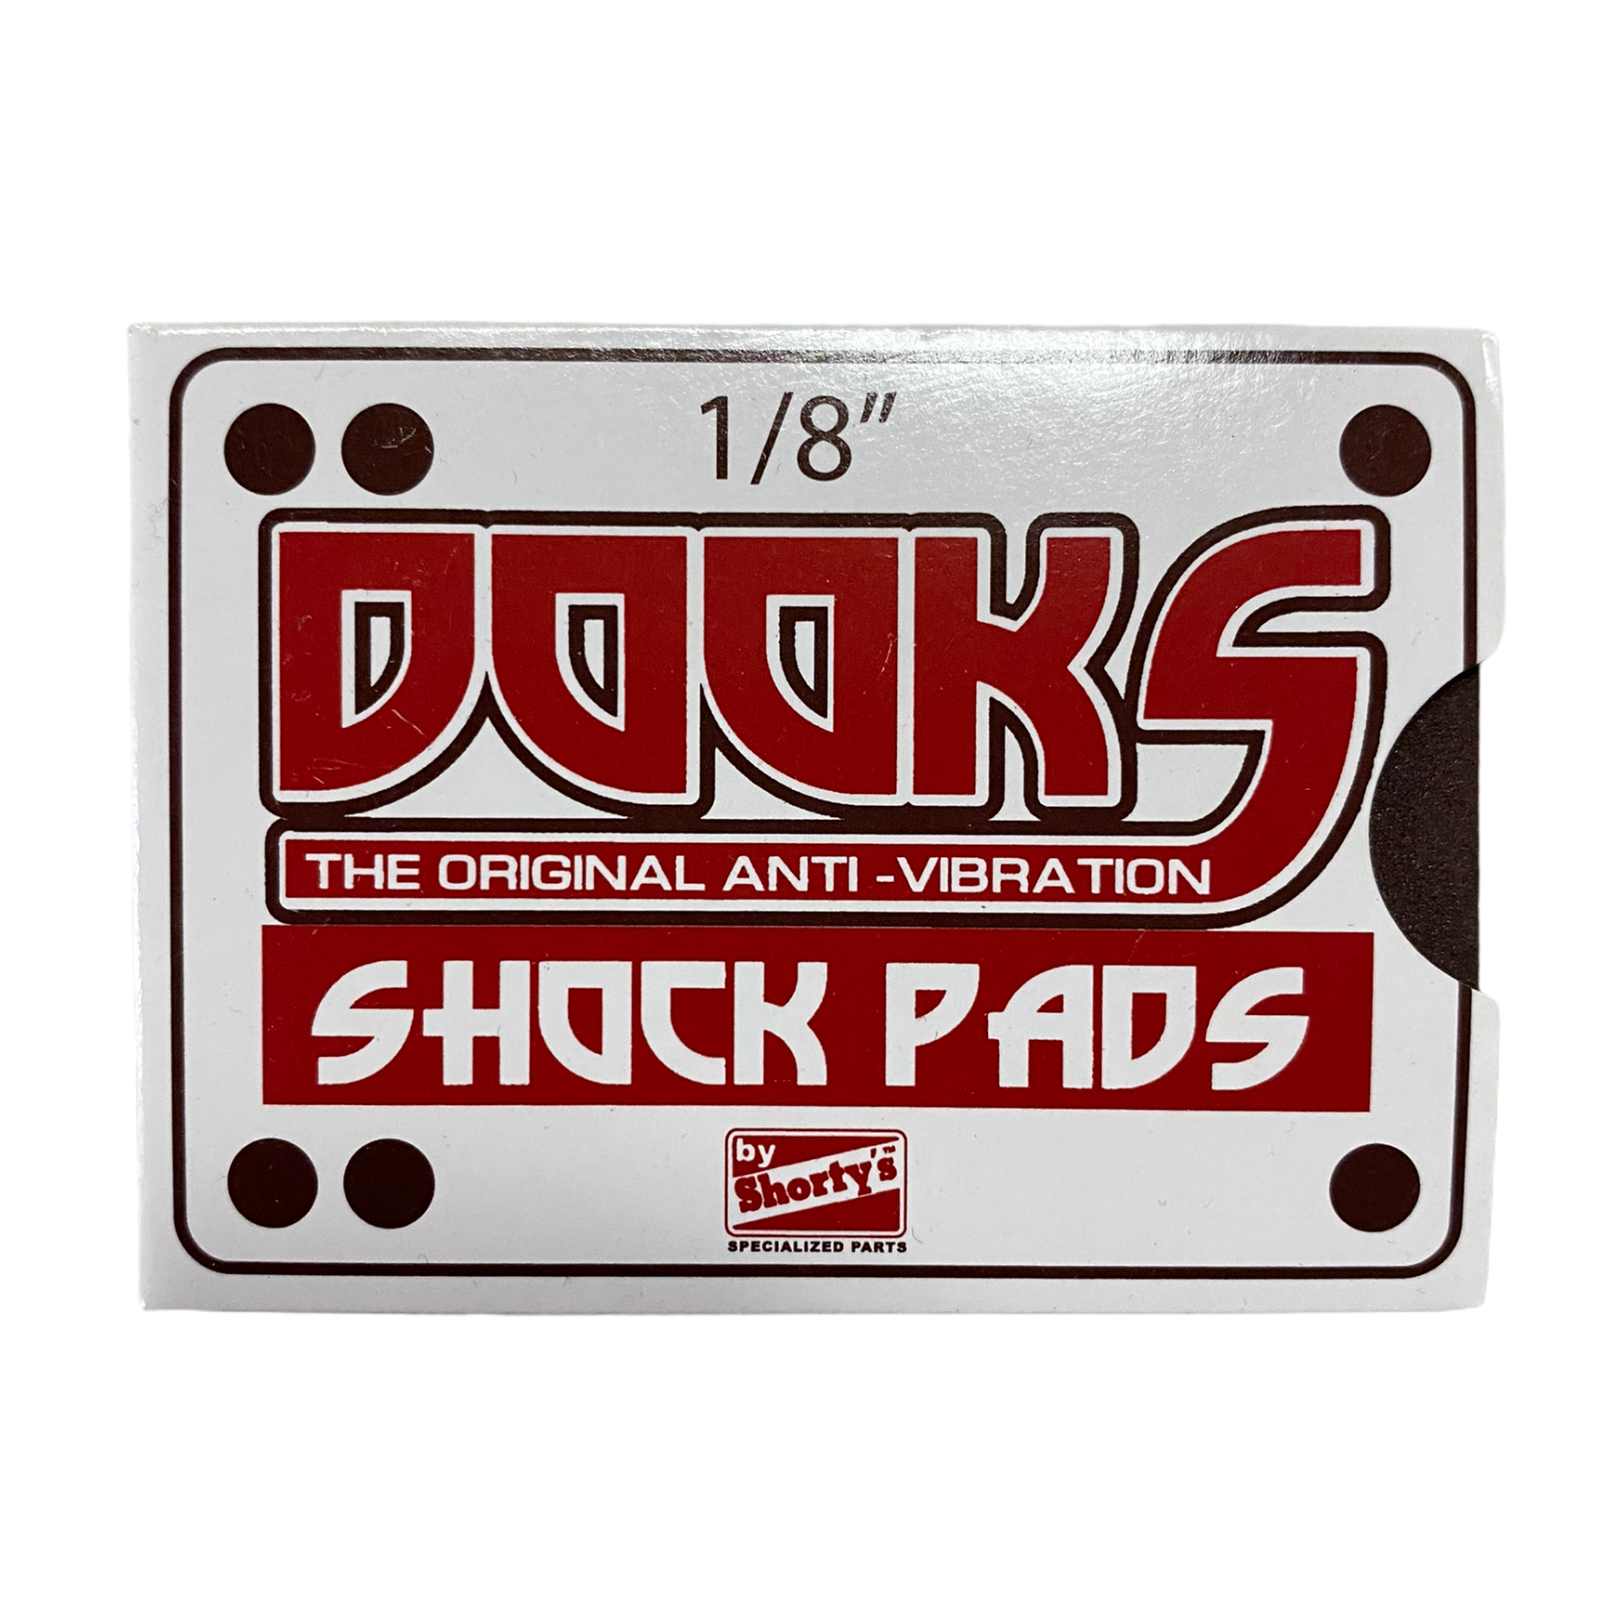 Dooks Shock Pads 1/8"